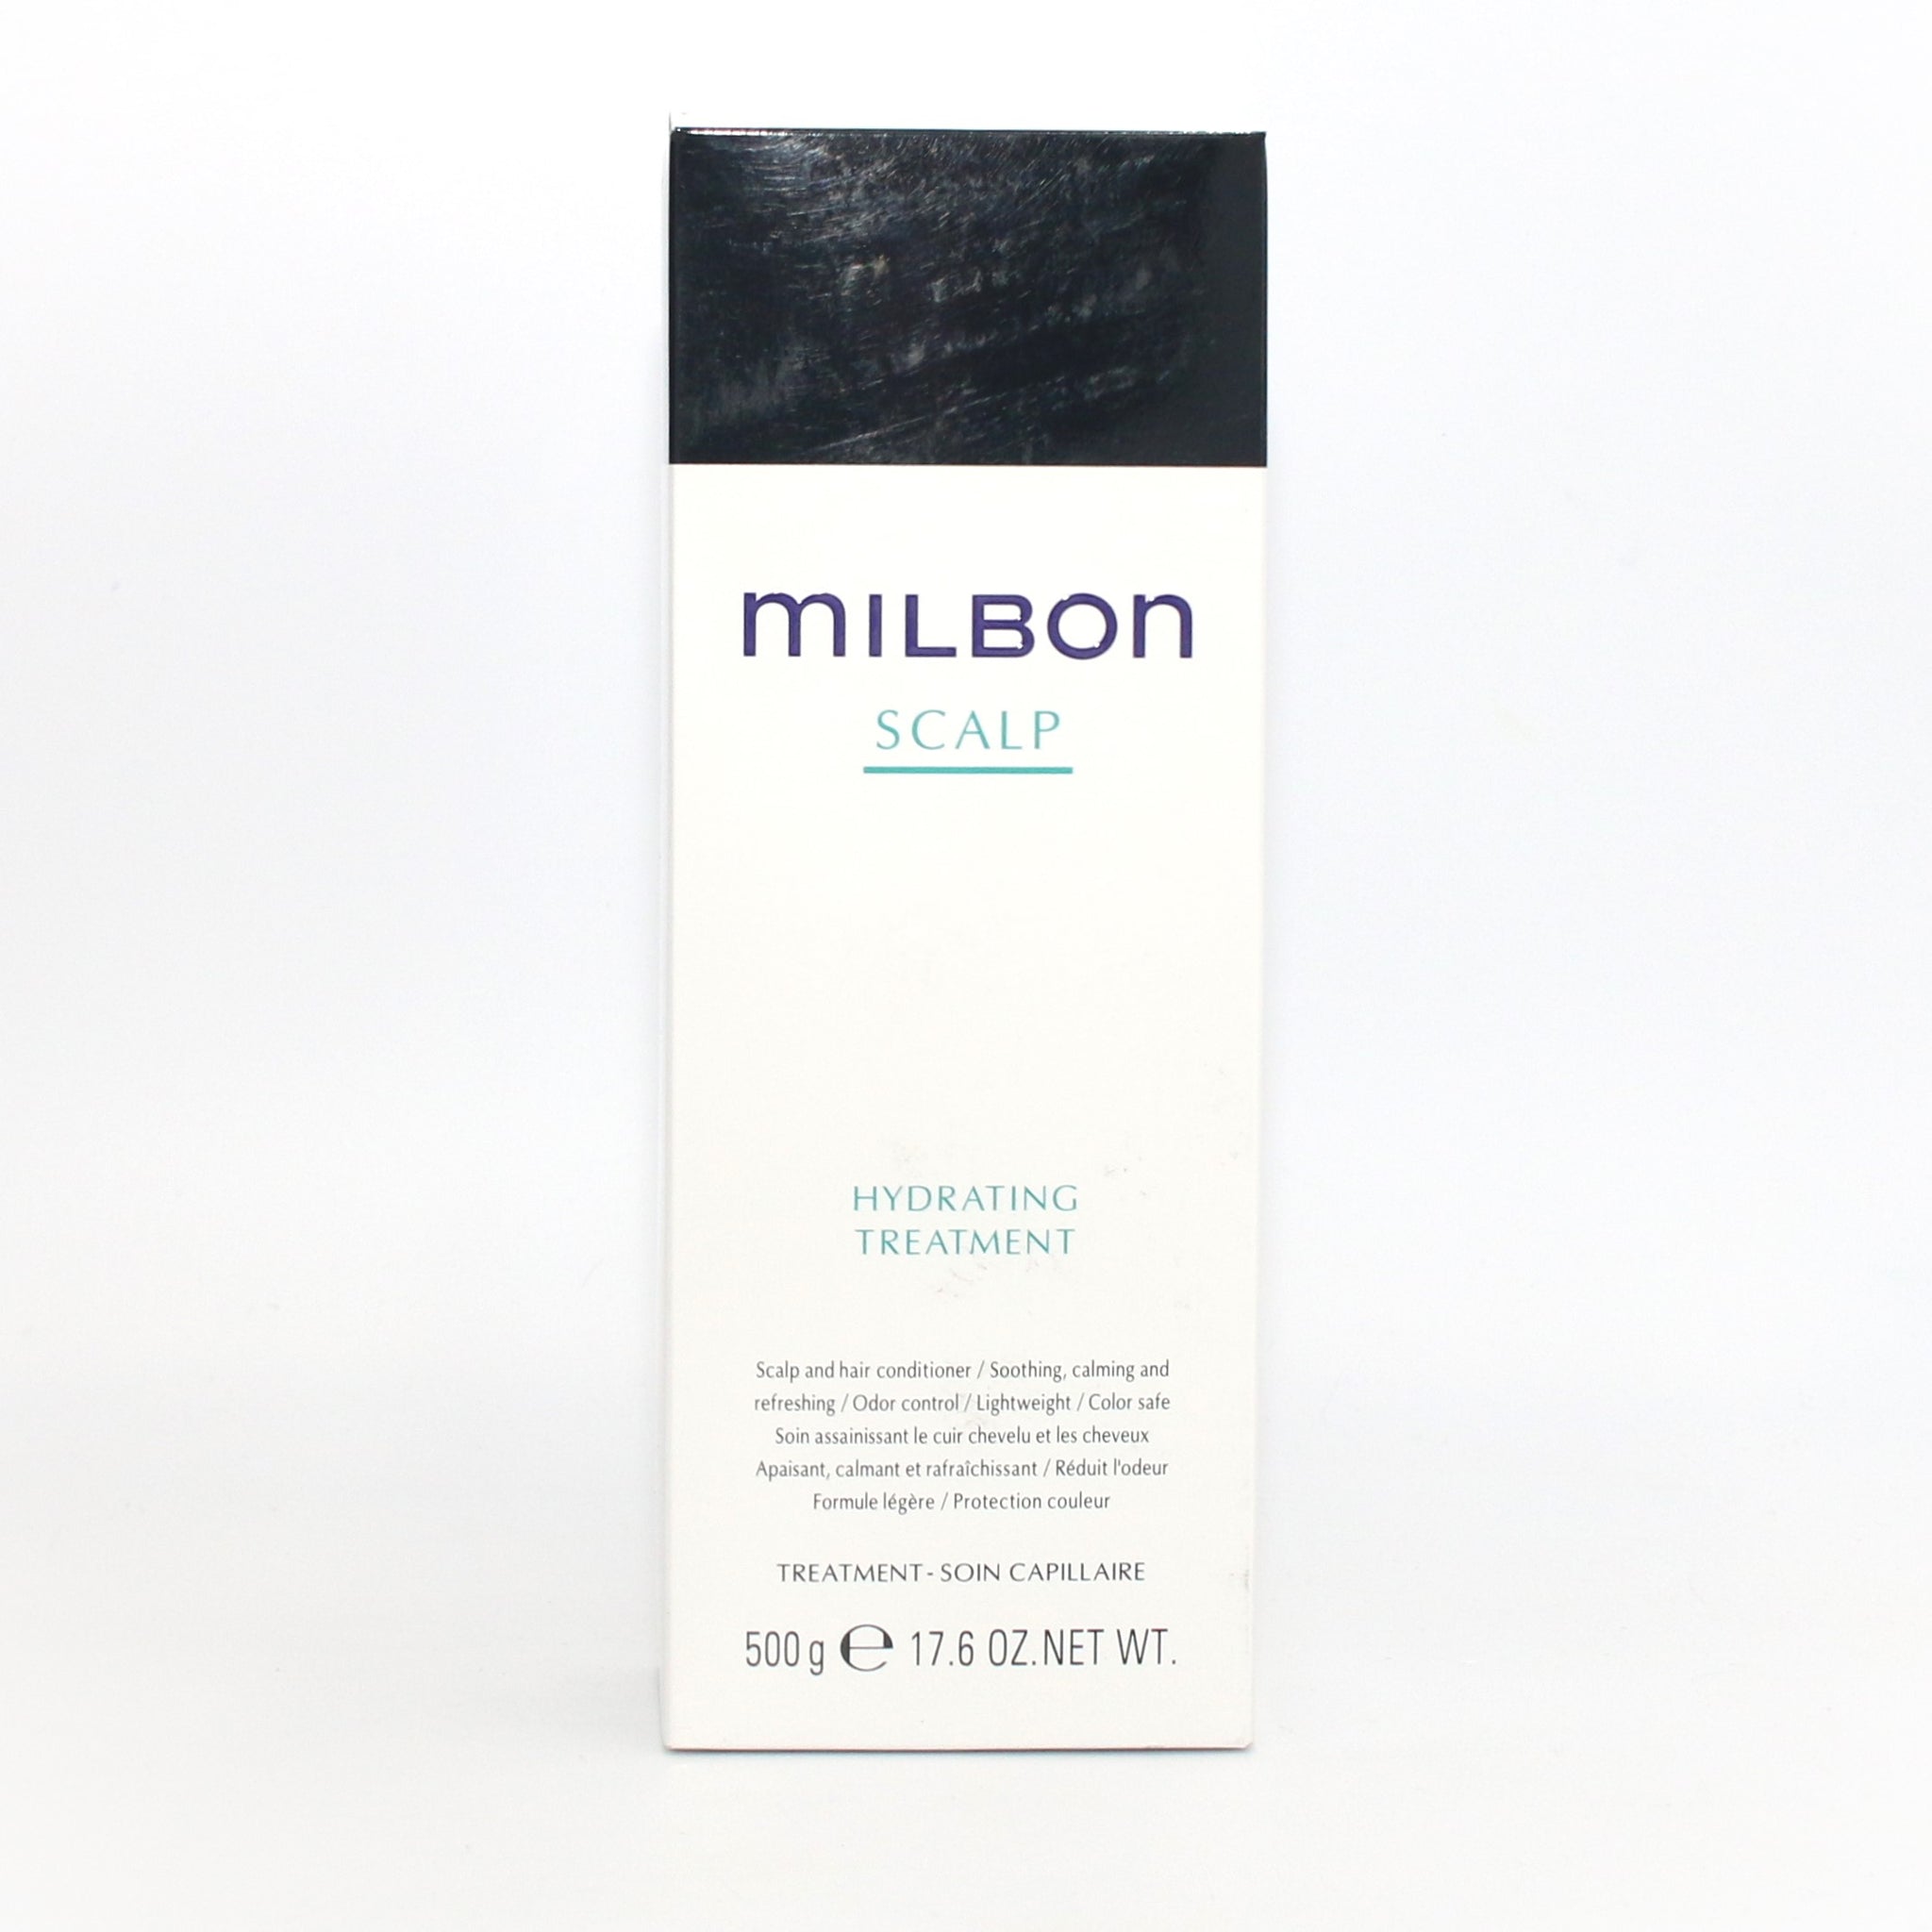 MILBON Scalp Hydrating Treatment 17.6 oz